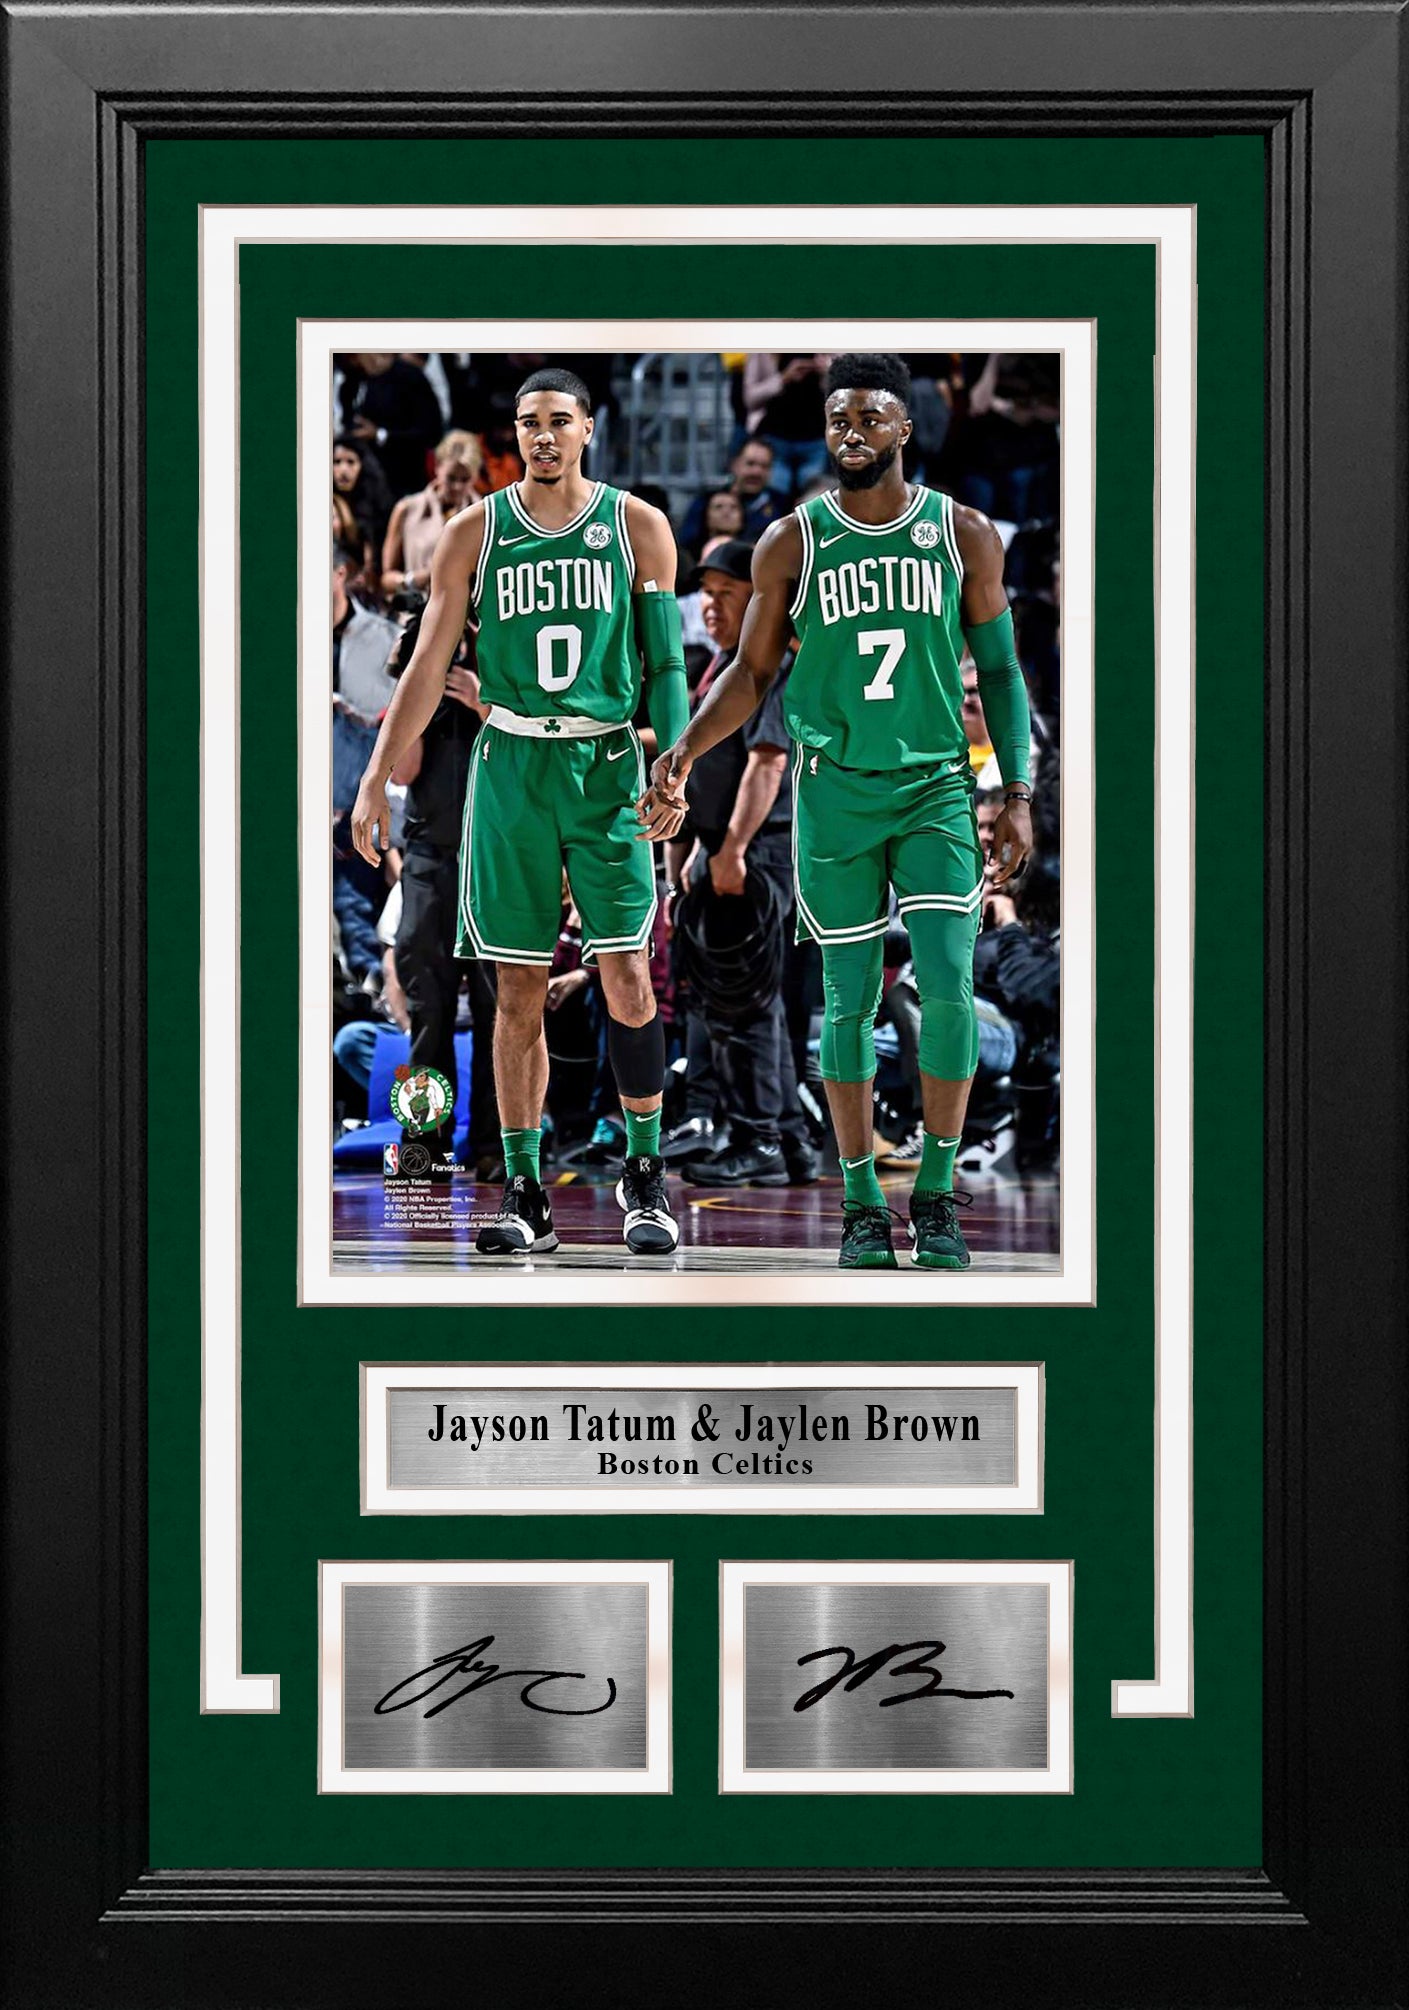 Jayson Tatum and Jaylen Brown Boston Celtics 8x10 Framed Basketball Photo with Engraved Autographs - Dynasty Sports & Framing 